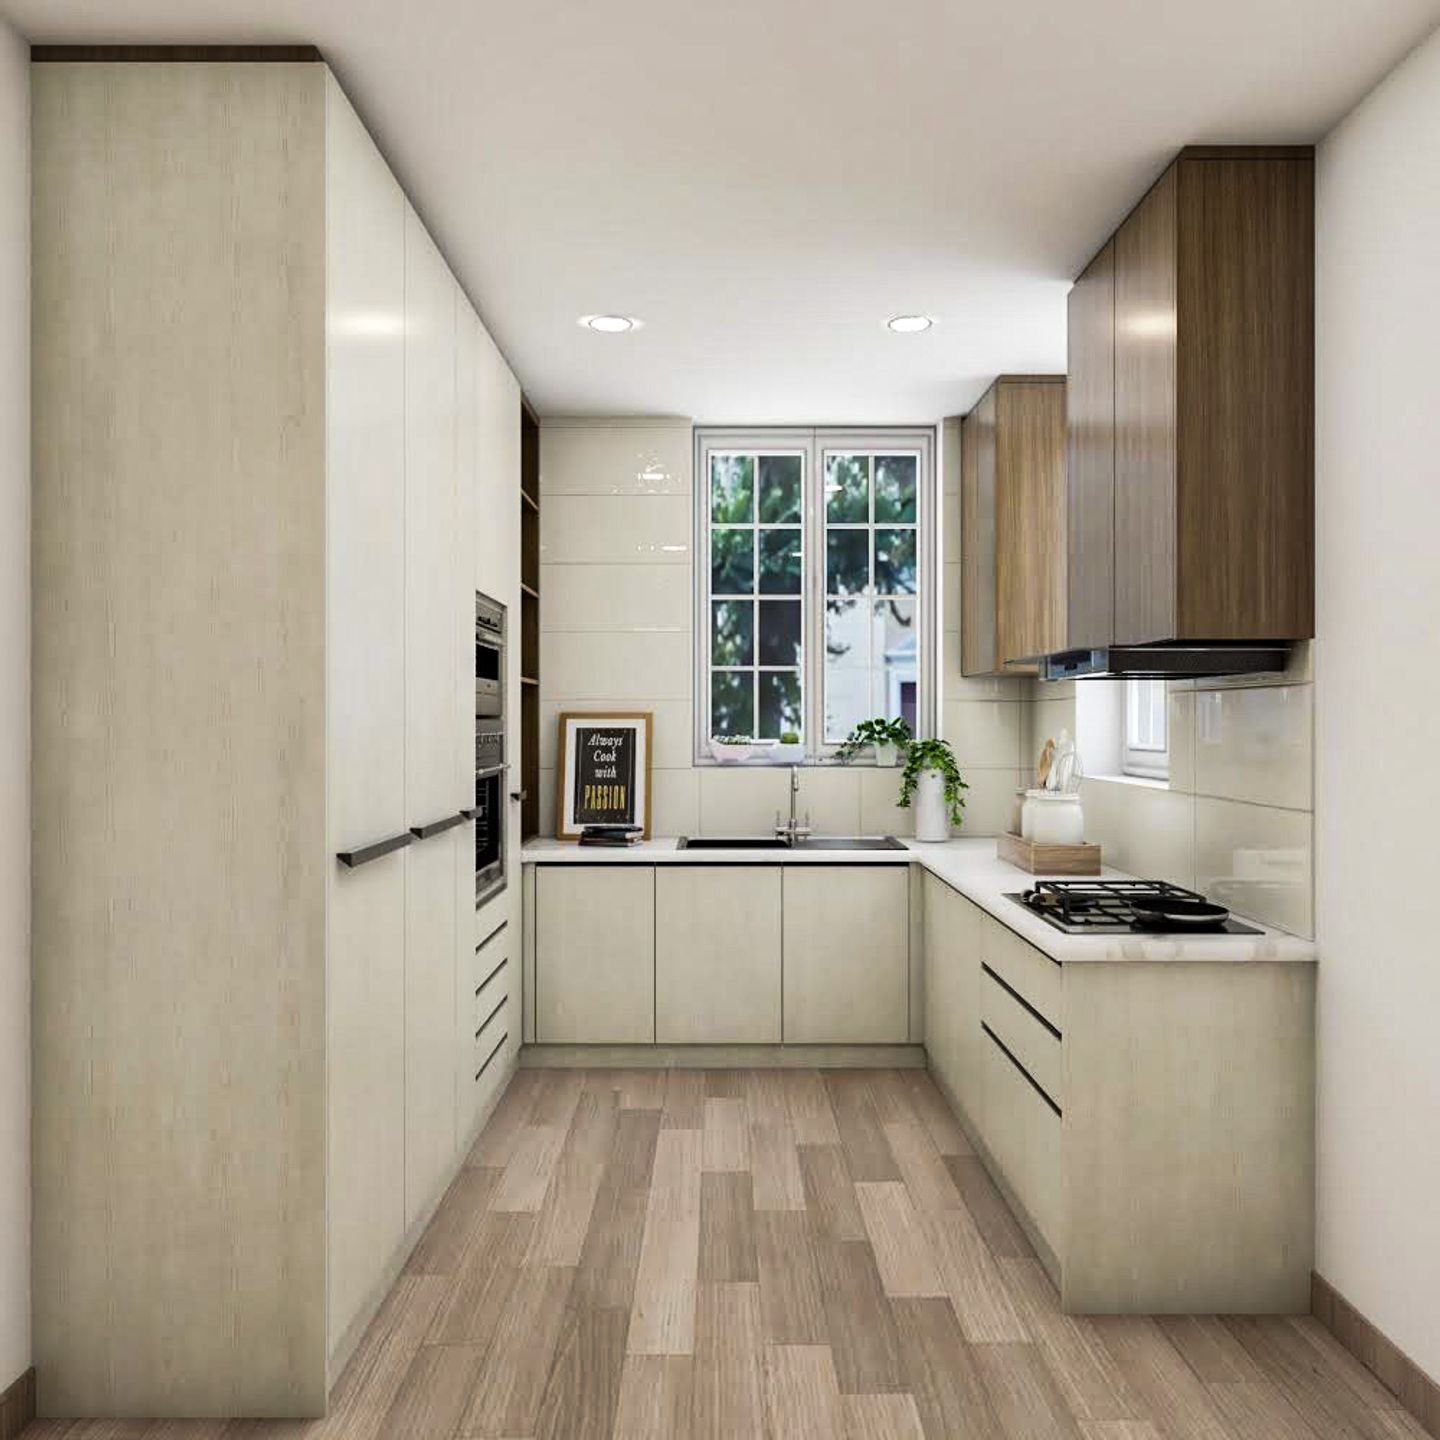 Beige And Wood Kitchen Design With Wooden Flooring - Livspace